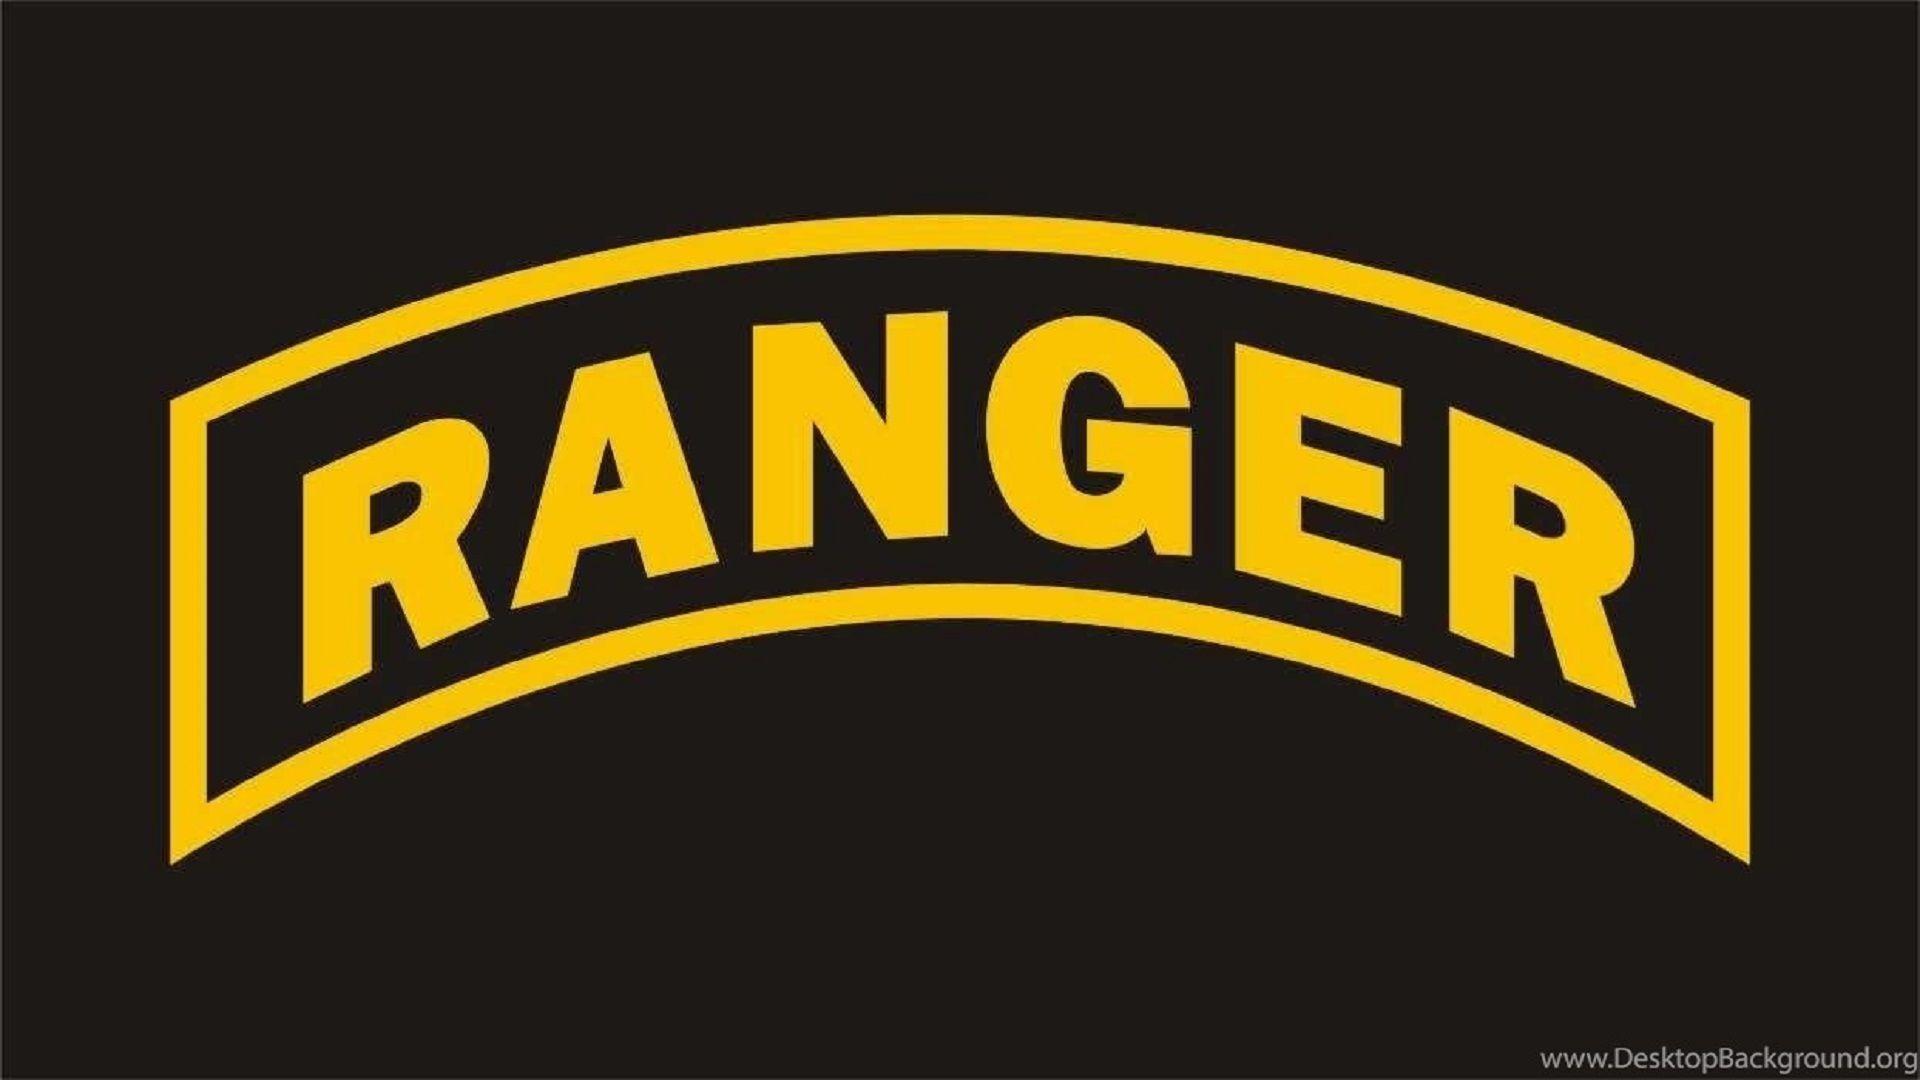 Army ranger wallpaper Gallery